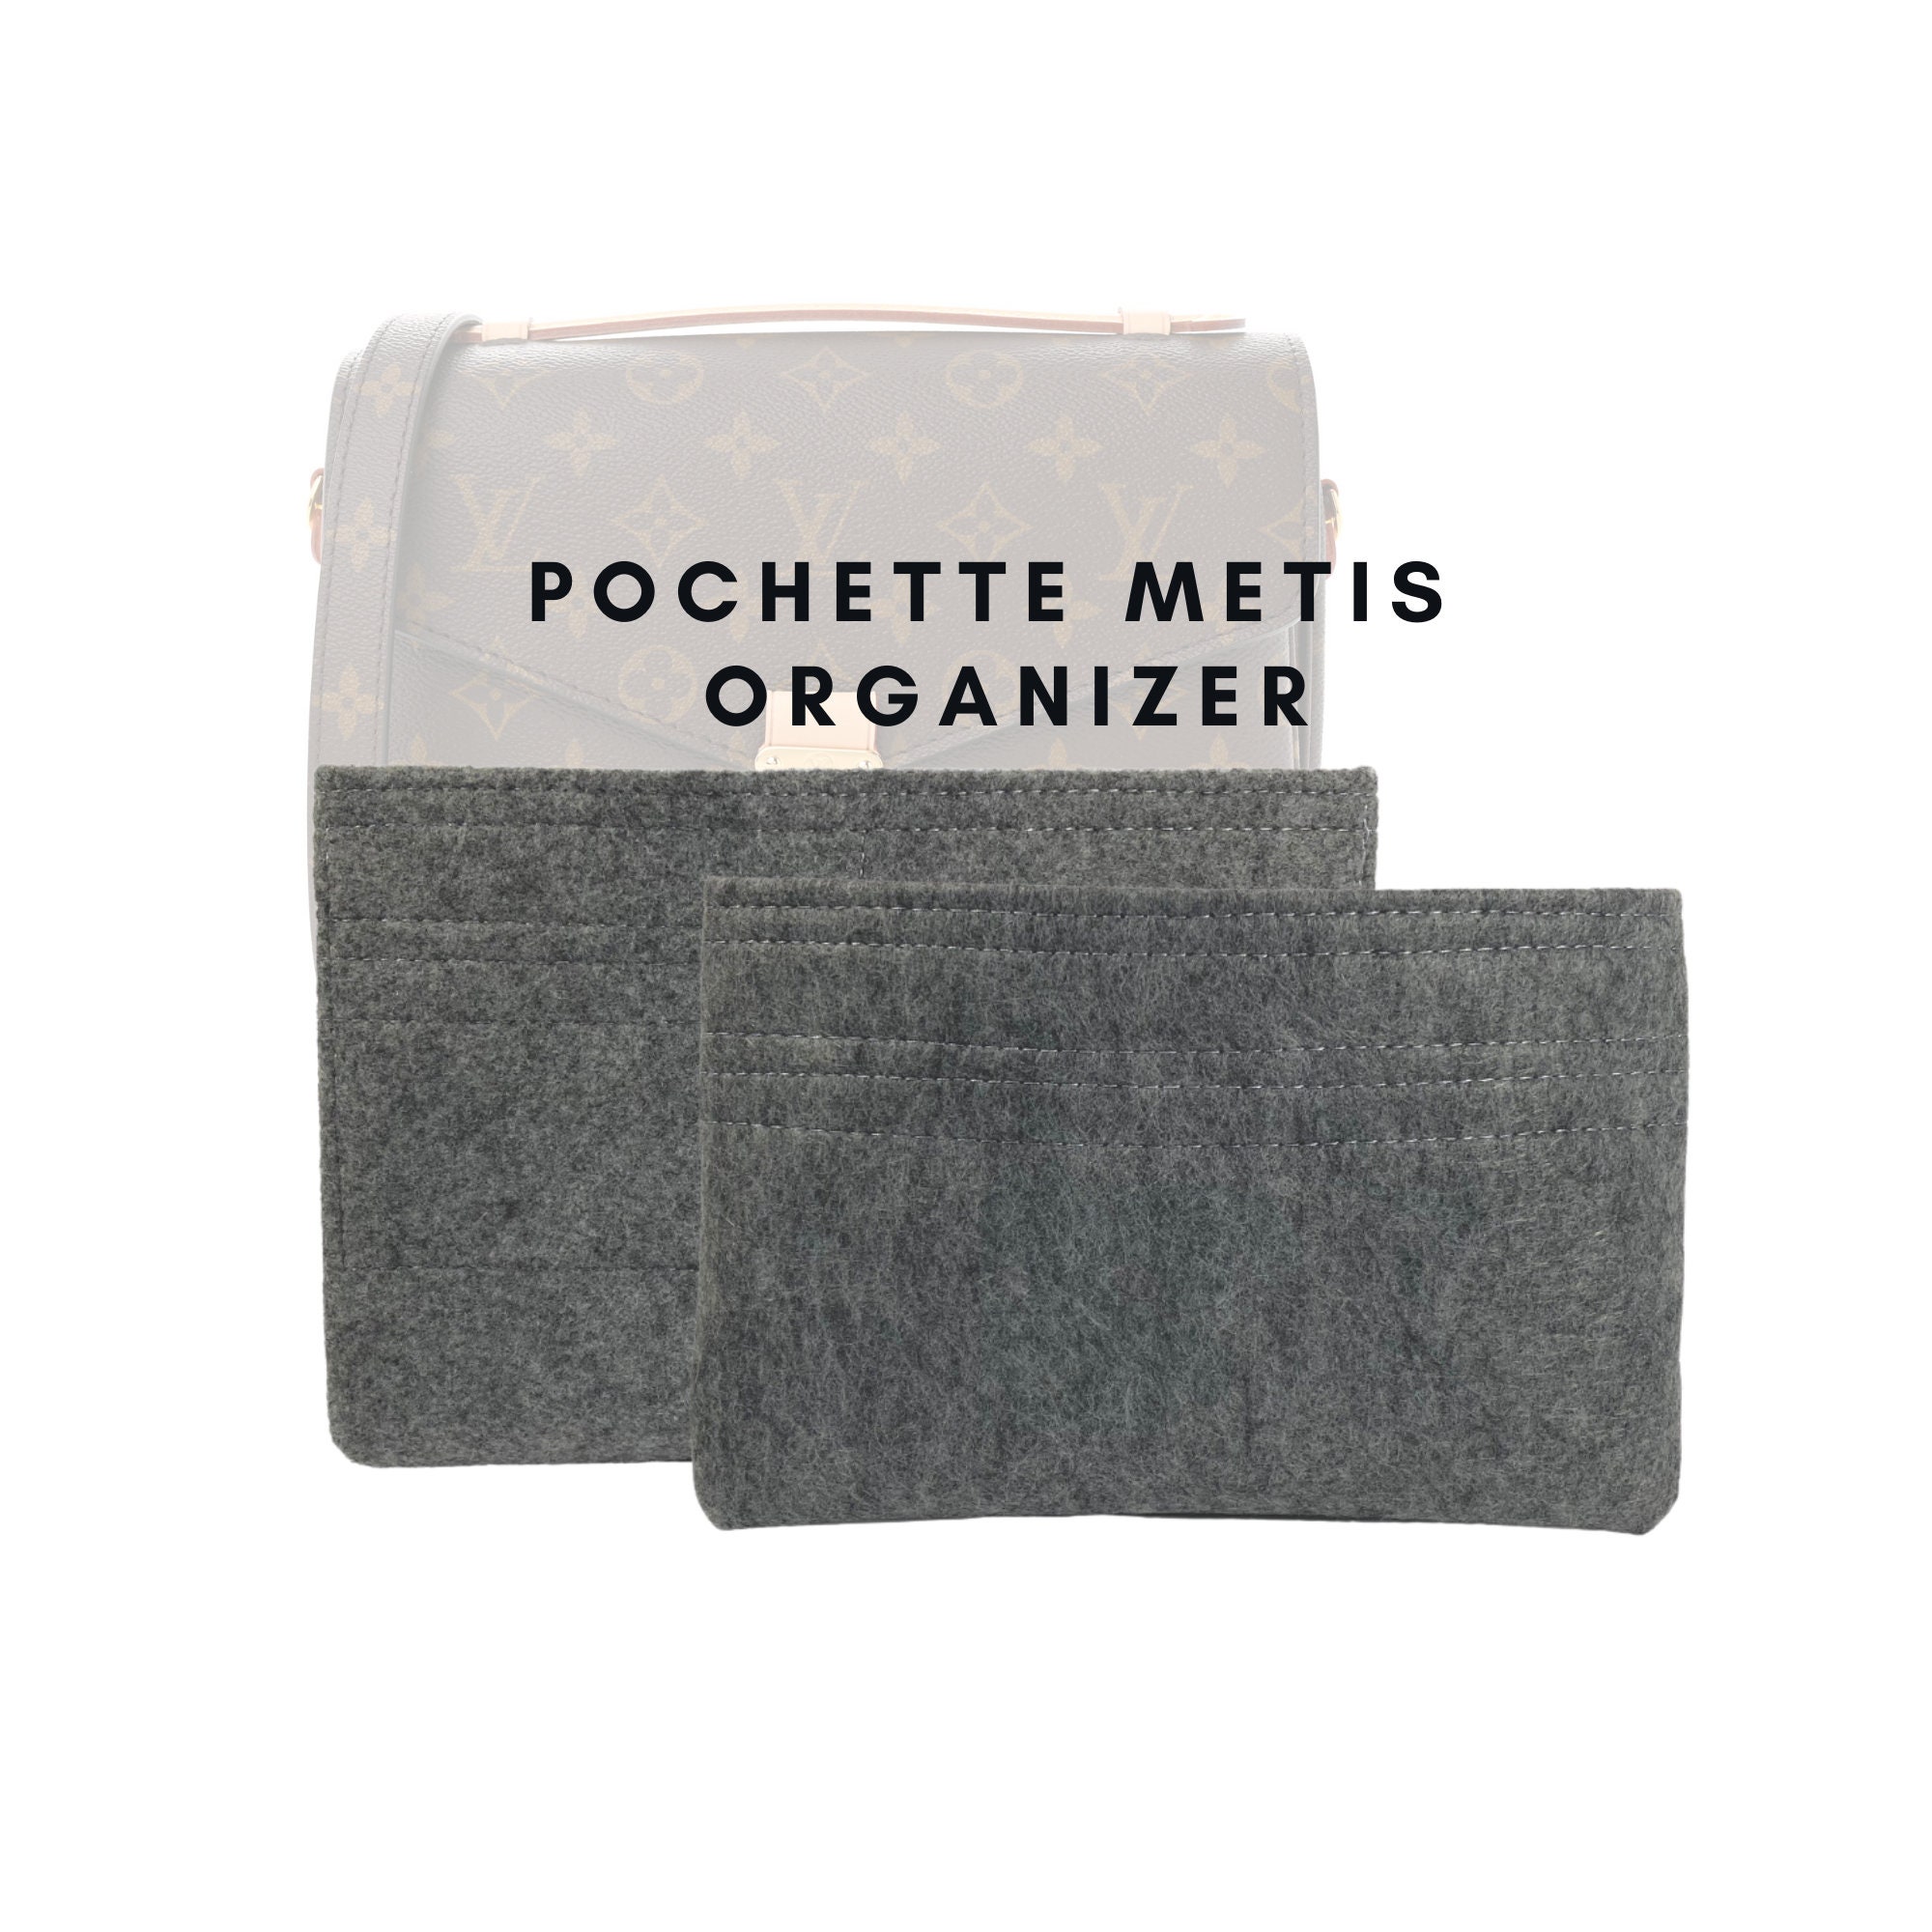 Organizer that fits Pochette Metis – Organisella